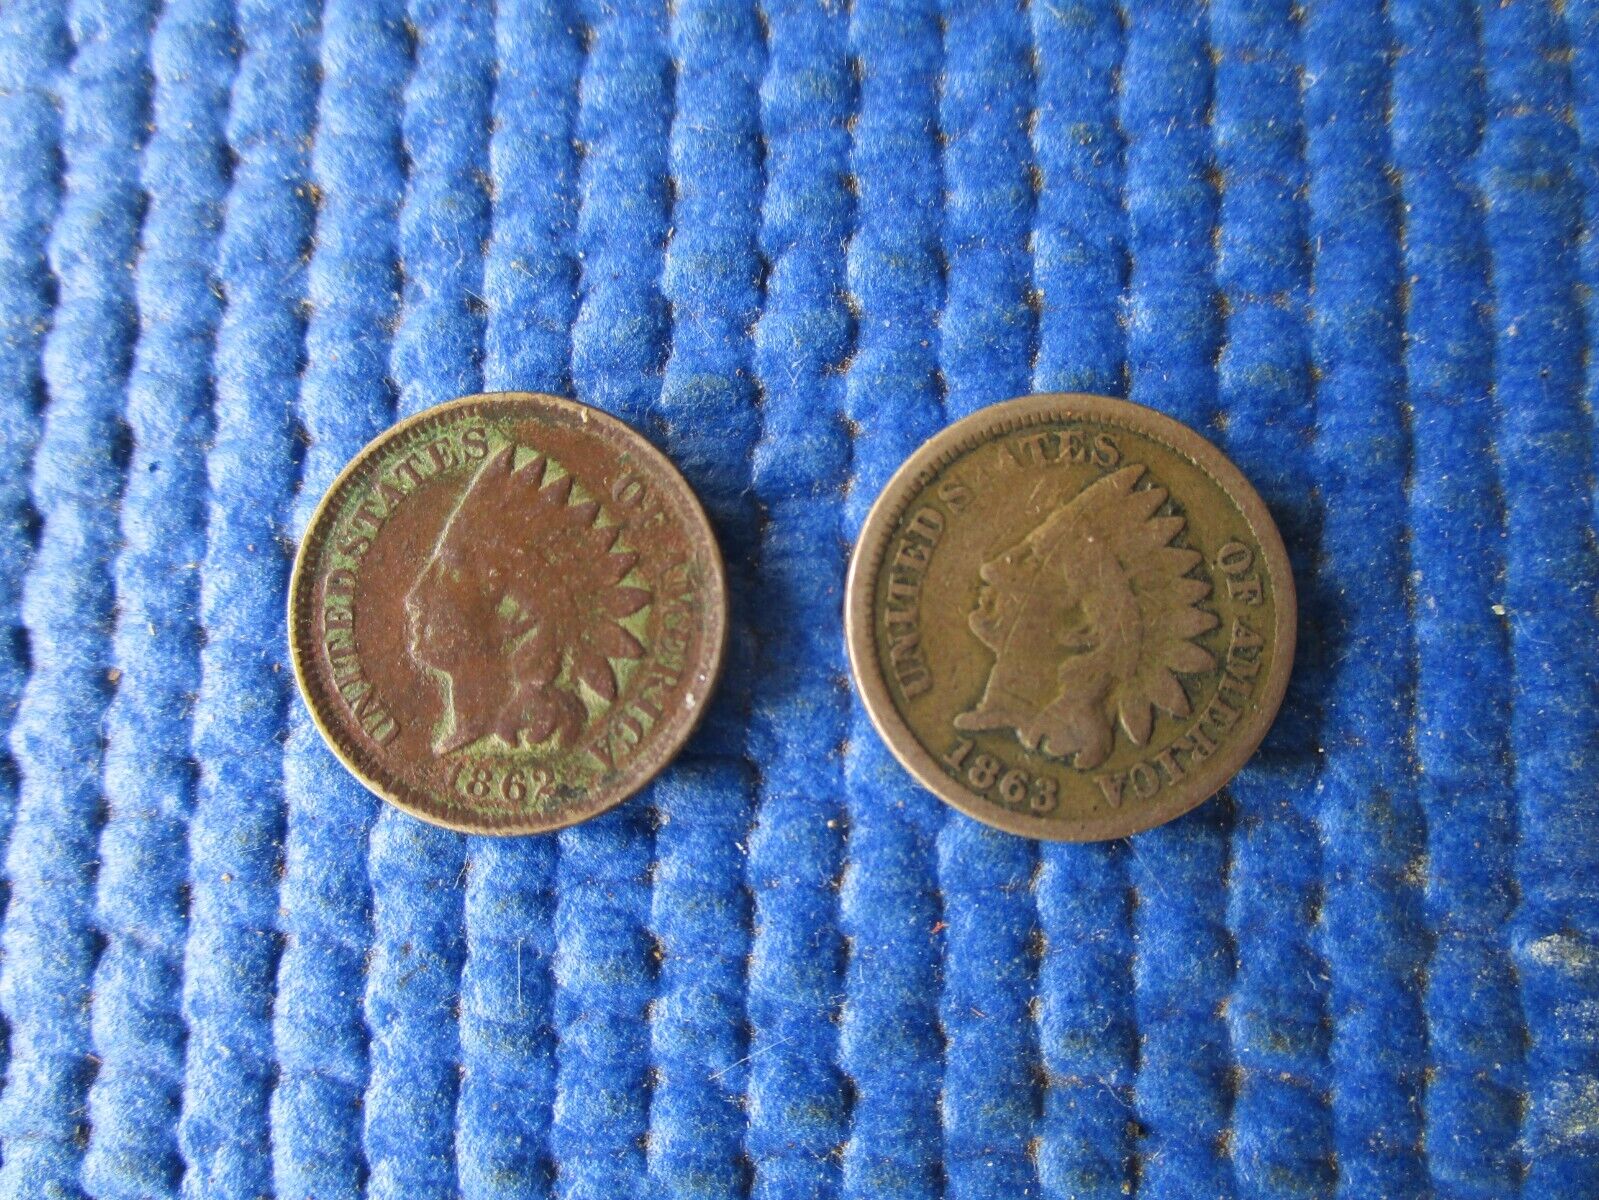 Antique Civil War Era Indian Pennies Dated 1862 & 1863